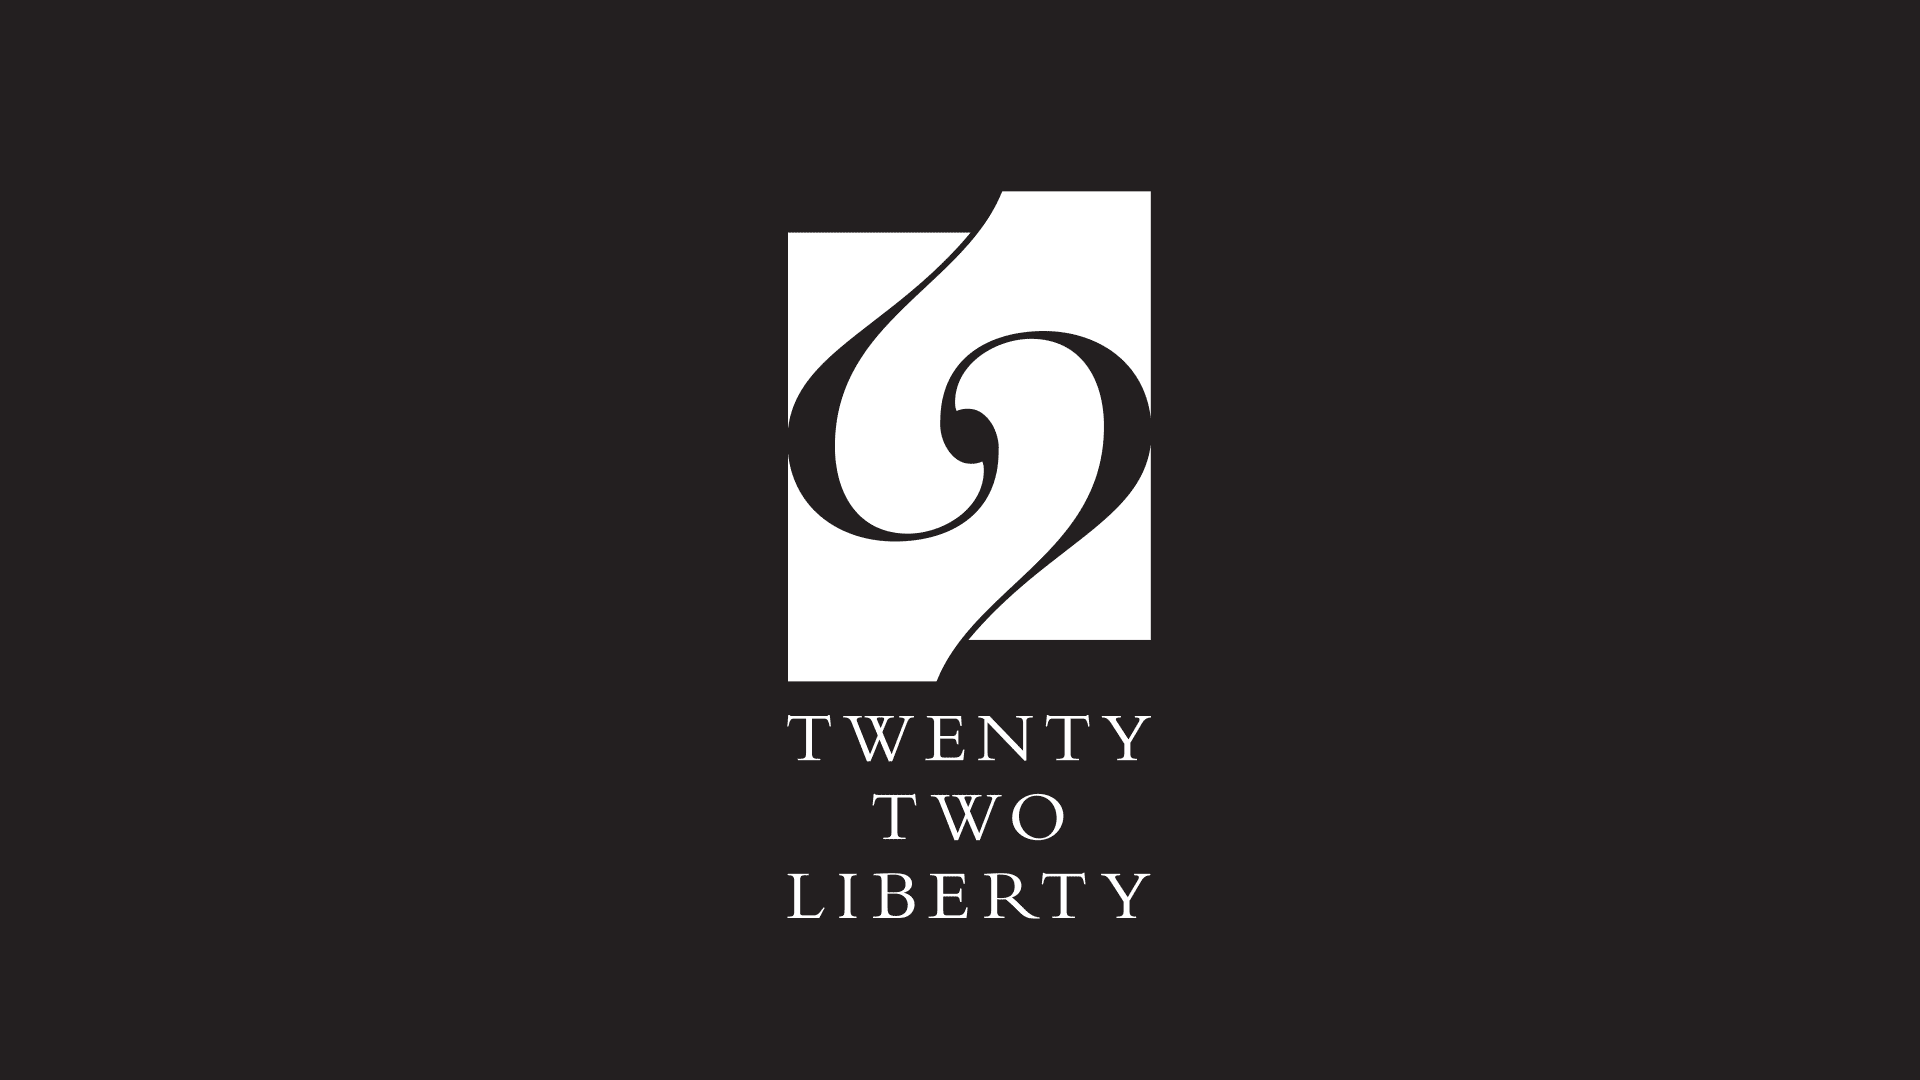 22 Liberty logo on black background